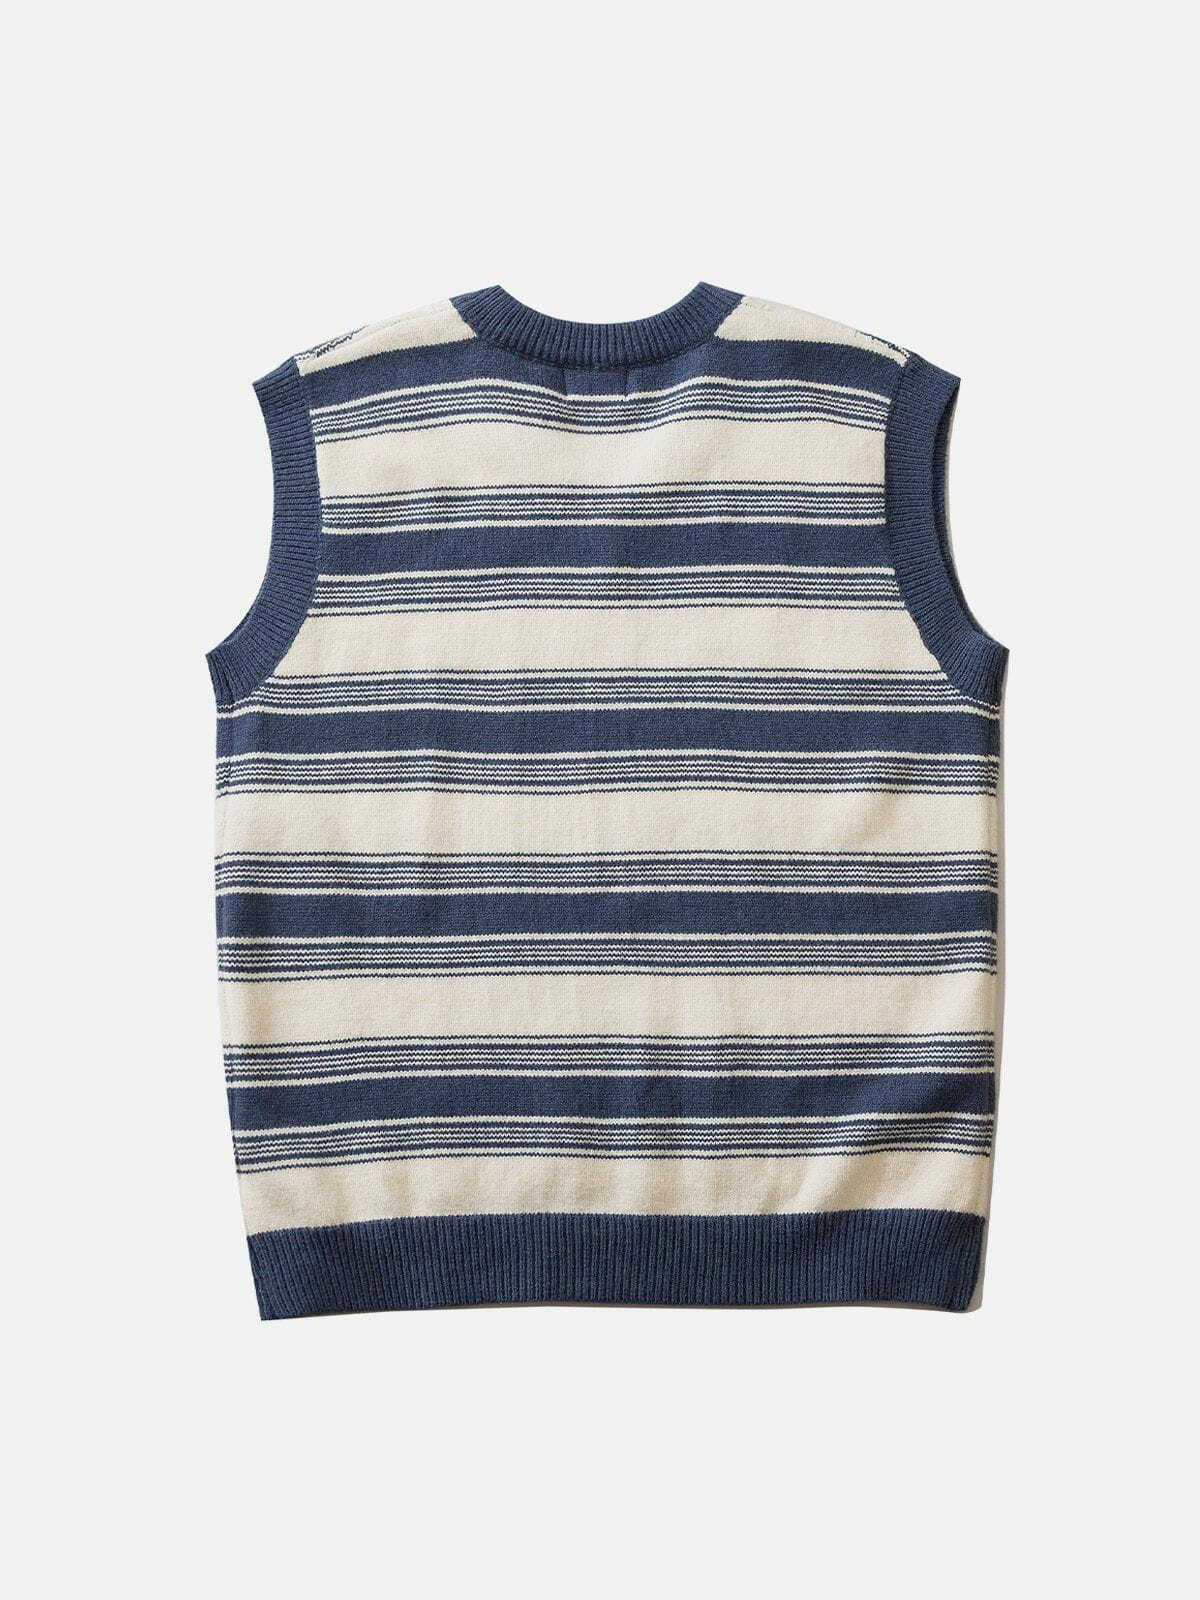 colorblock stripe sweater vest edgy retro statement piece 2922